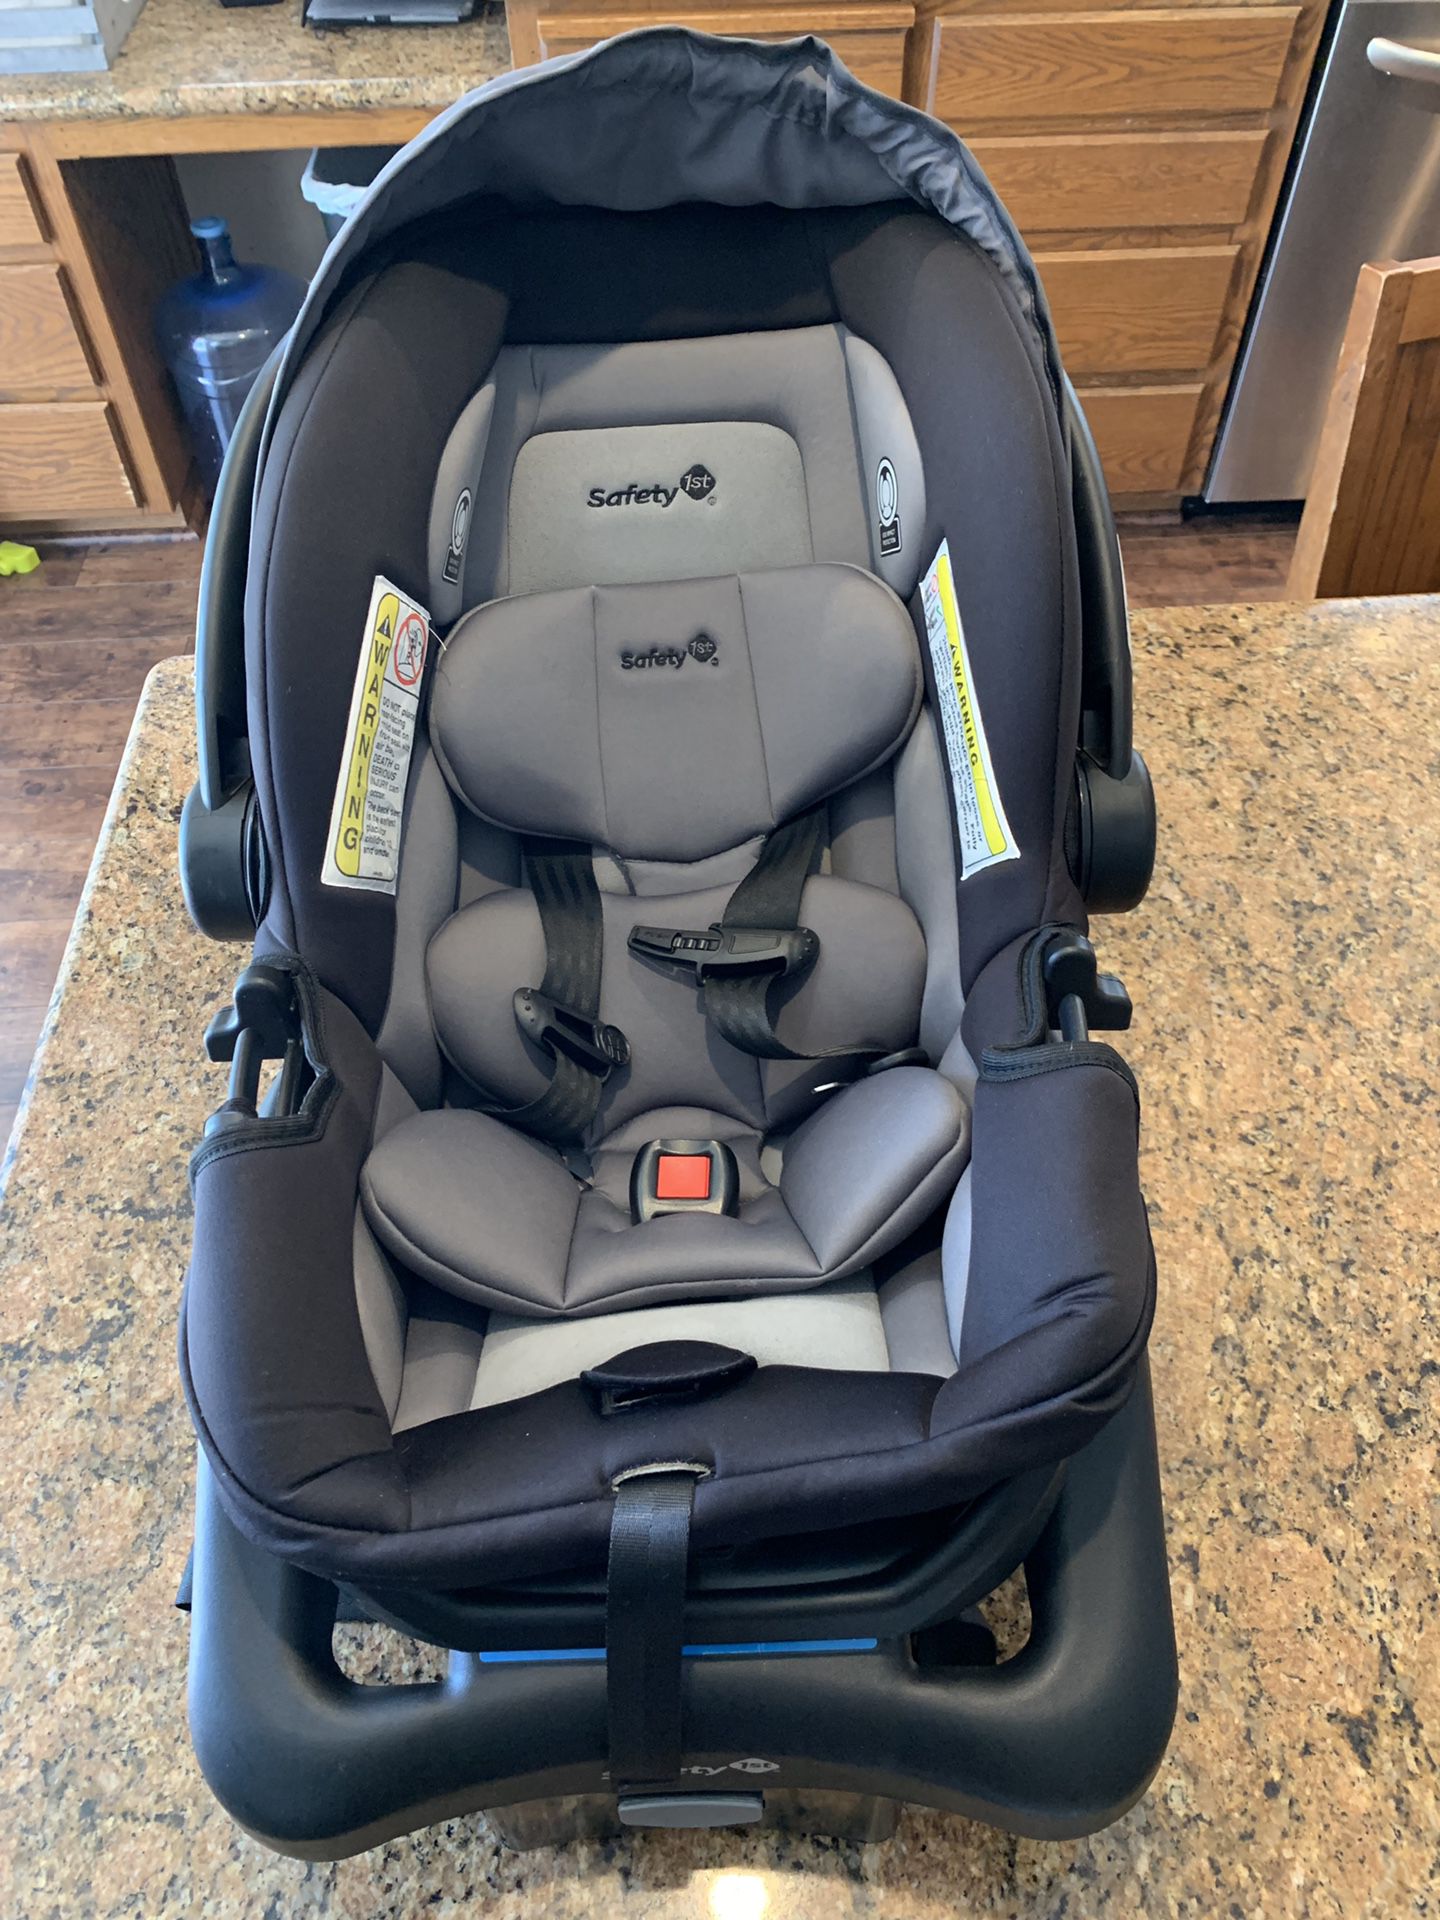 Safety 1st infant car seat.